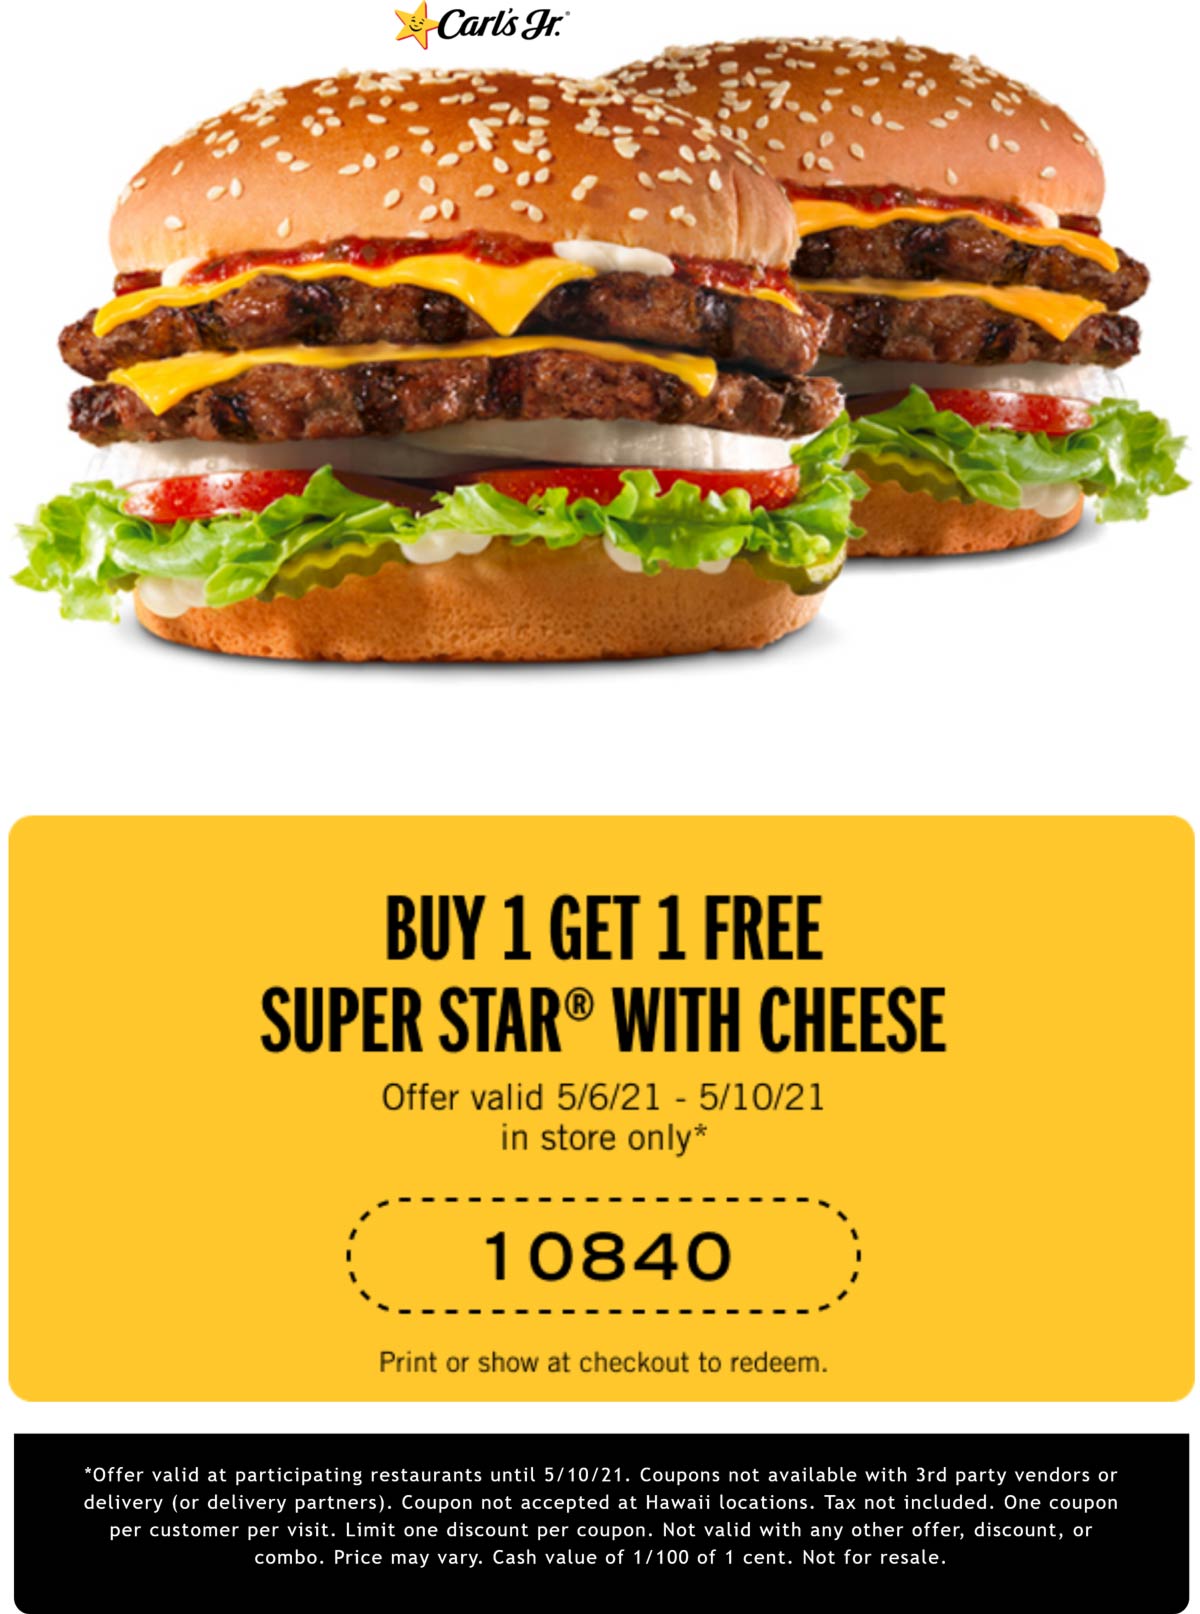 Carls Jr restaurants Coupon  Second super star cheeseburger free at Carls Jr #carlsjr 